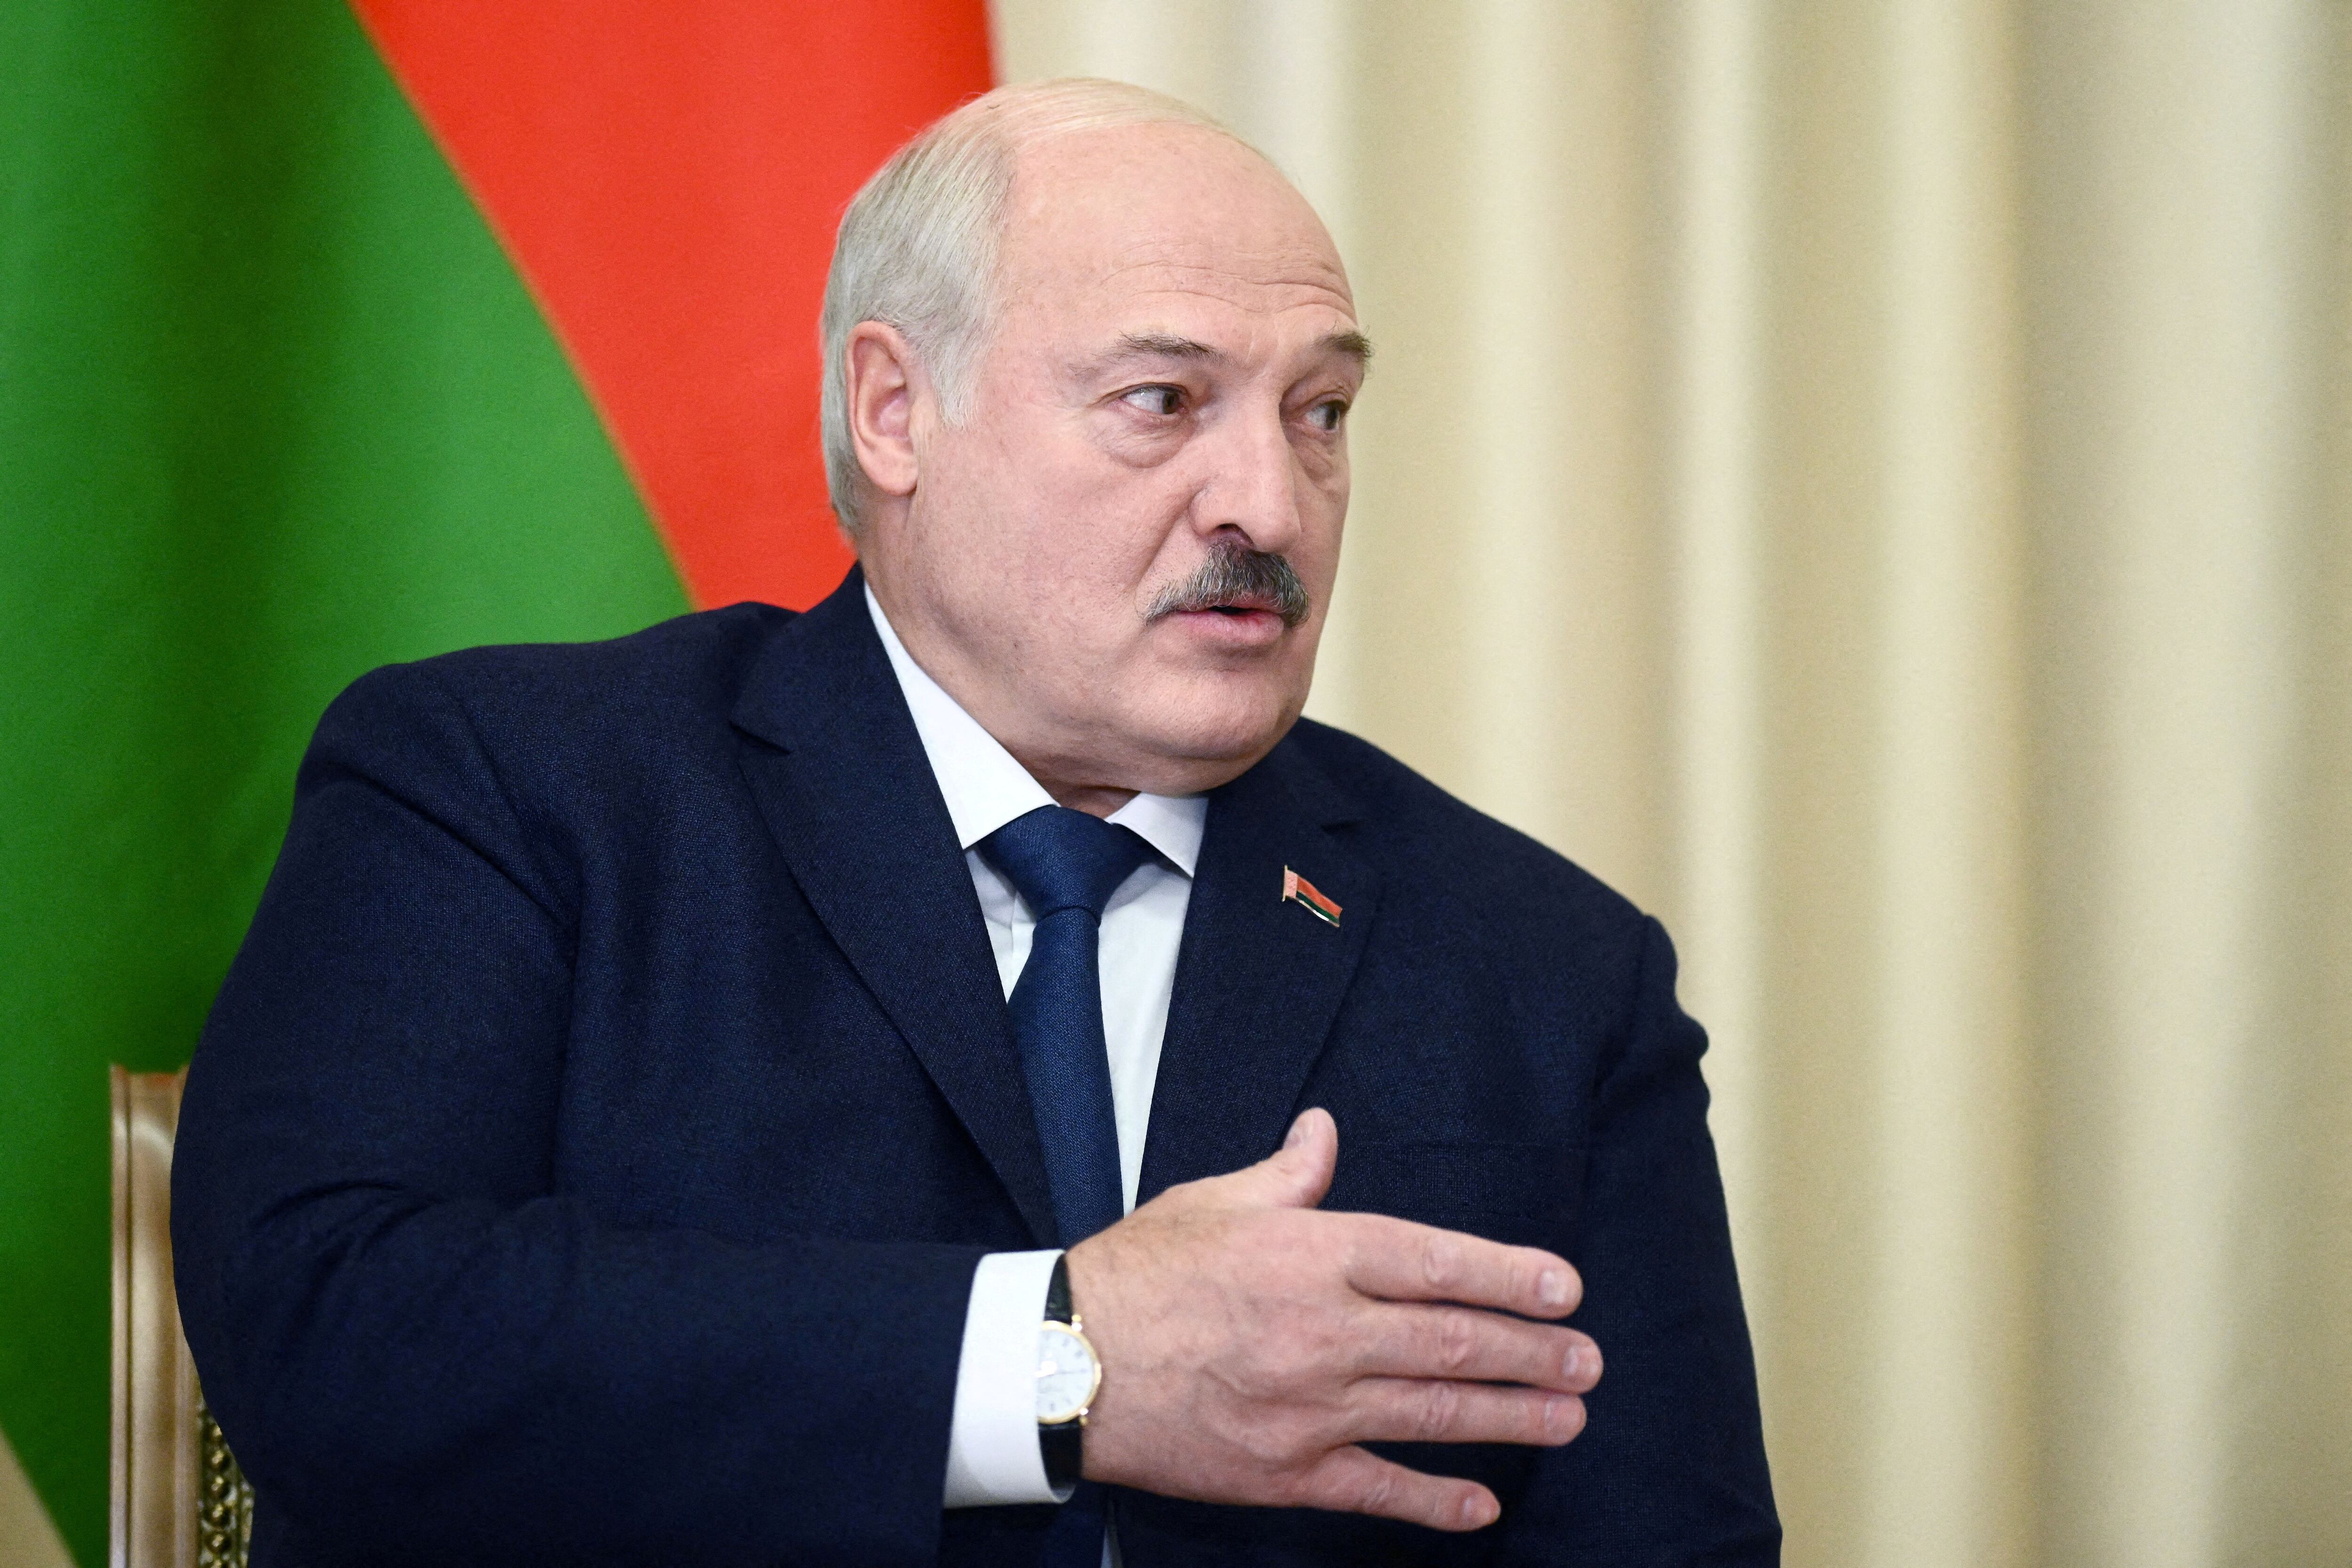 El dictador de Bielorrusia, Alexander Lukashenko. Sputnik/Vladimir Astapkovich/Kremlin via REUTERS ATTENTION EDITORS - THIS IMAGE WAS PROVIDED BY A THIRD PARTY./File Photo